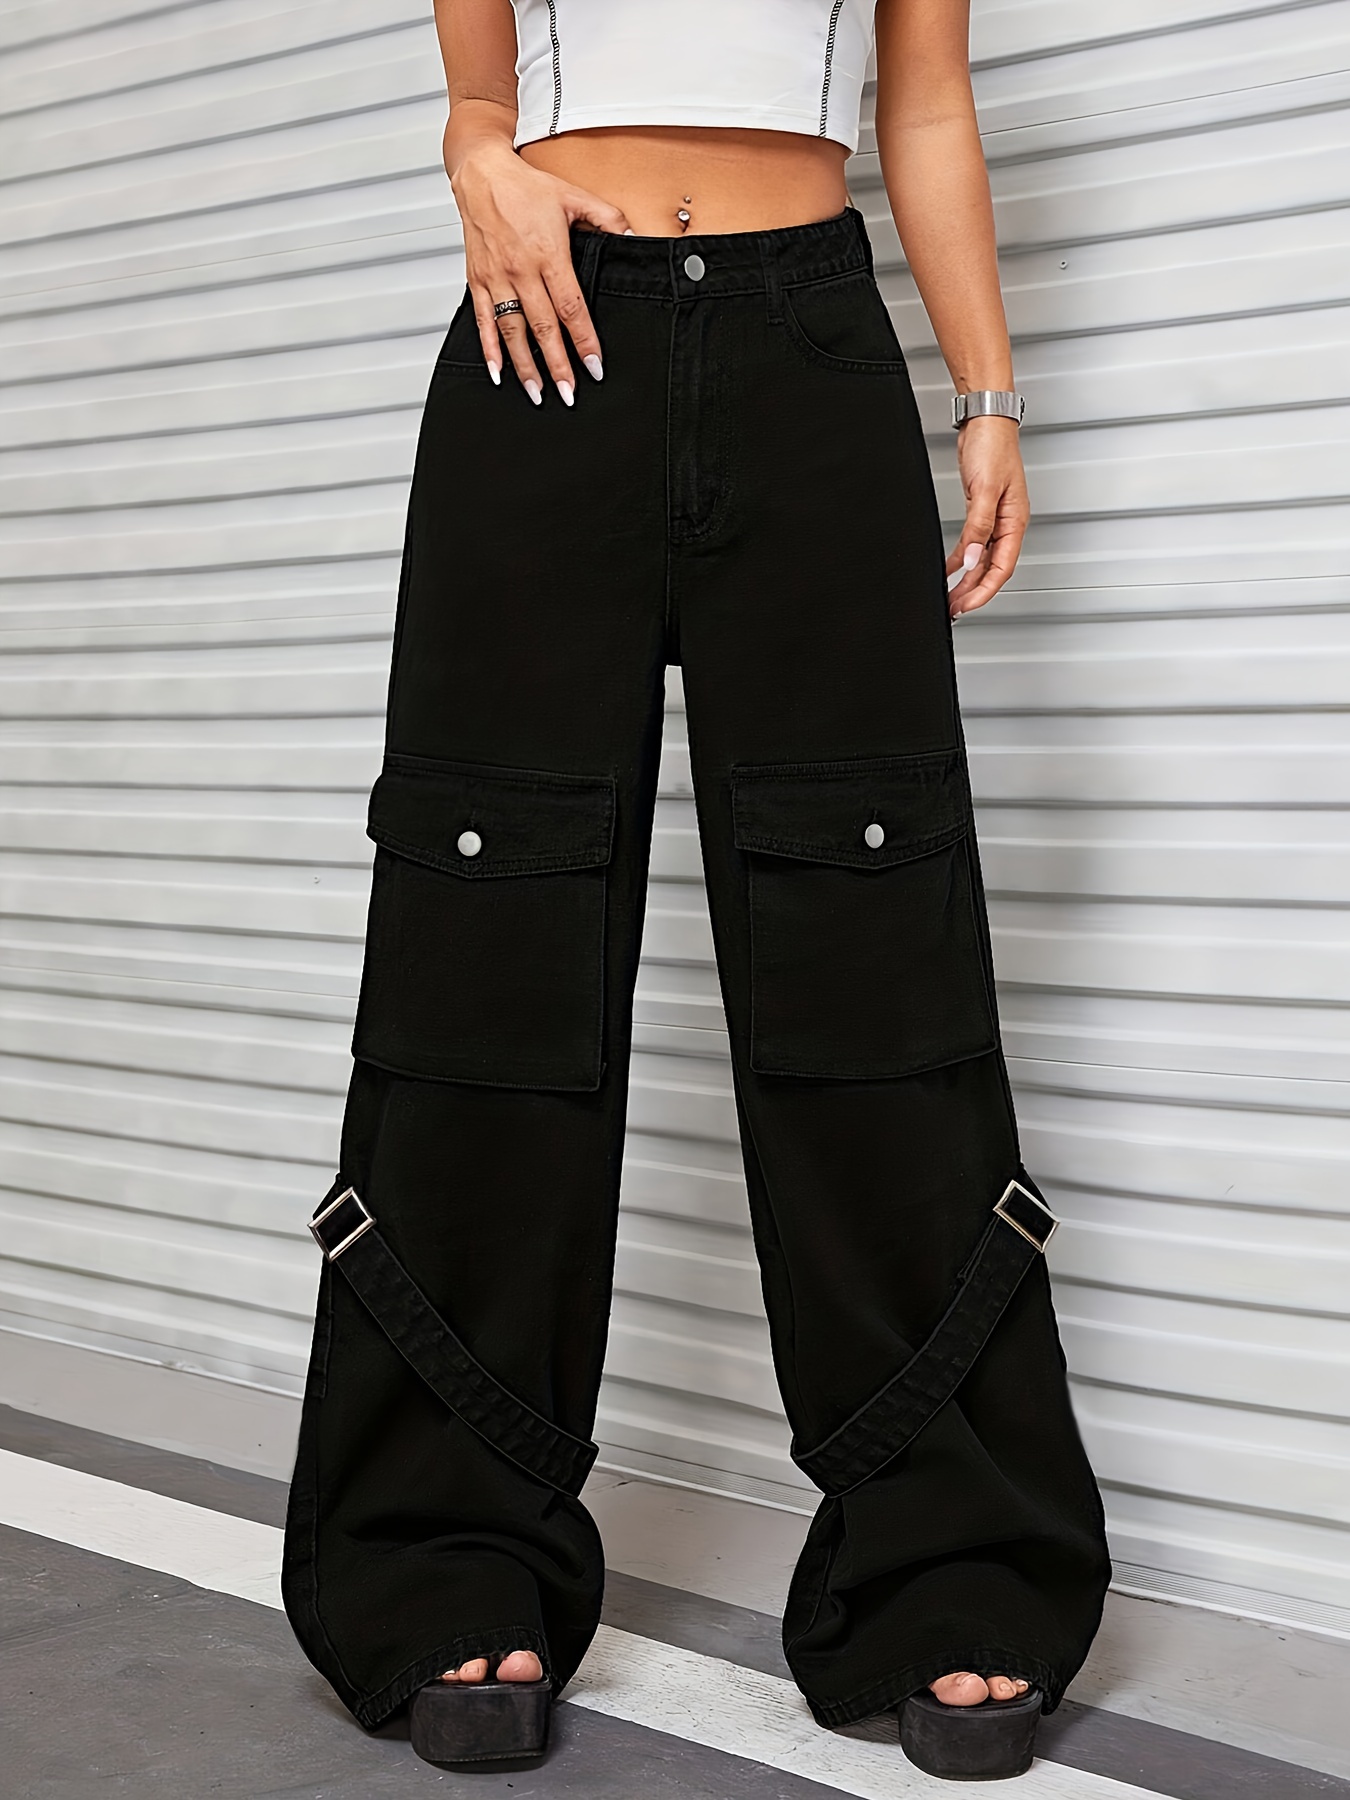 Pantalones Cargo negros para mujer, pantalones de cintura alta